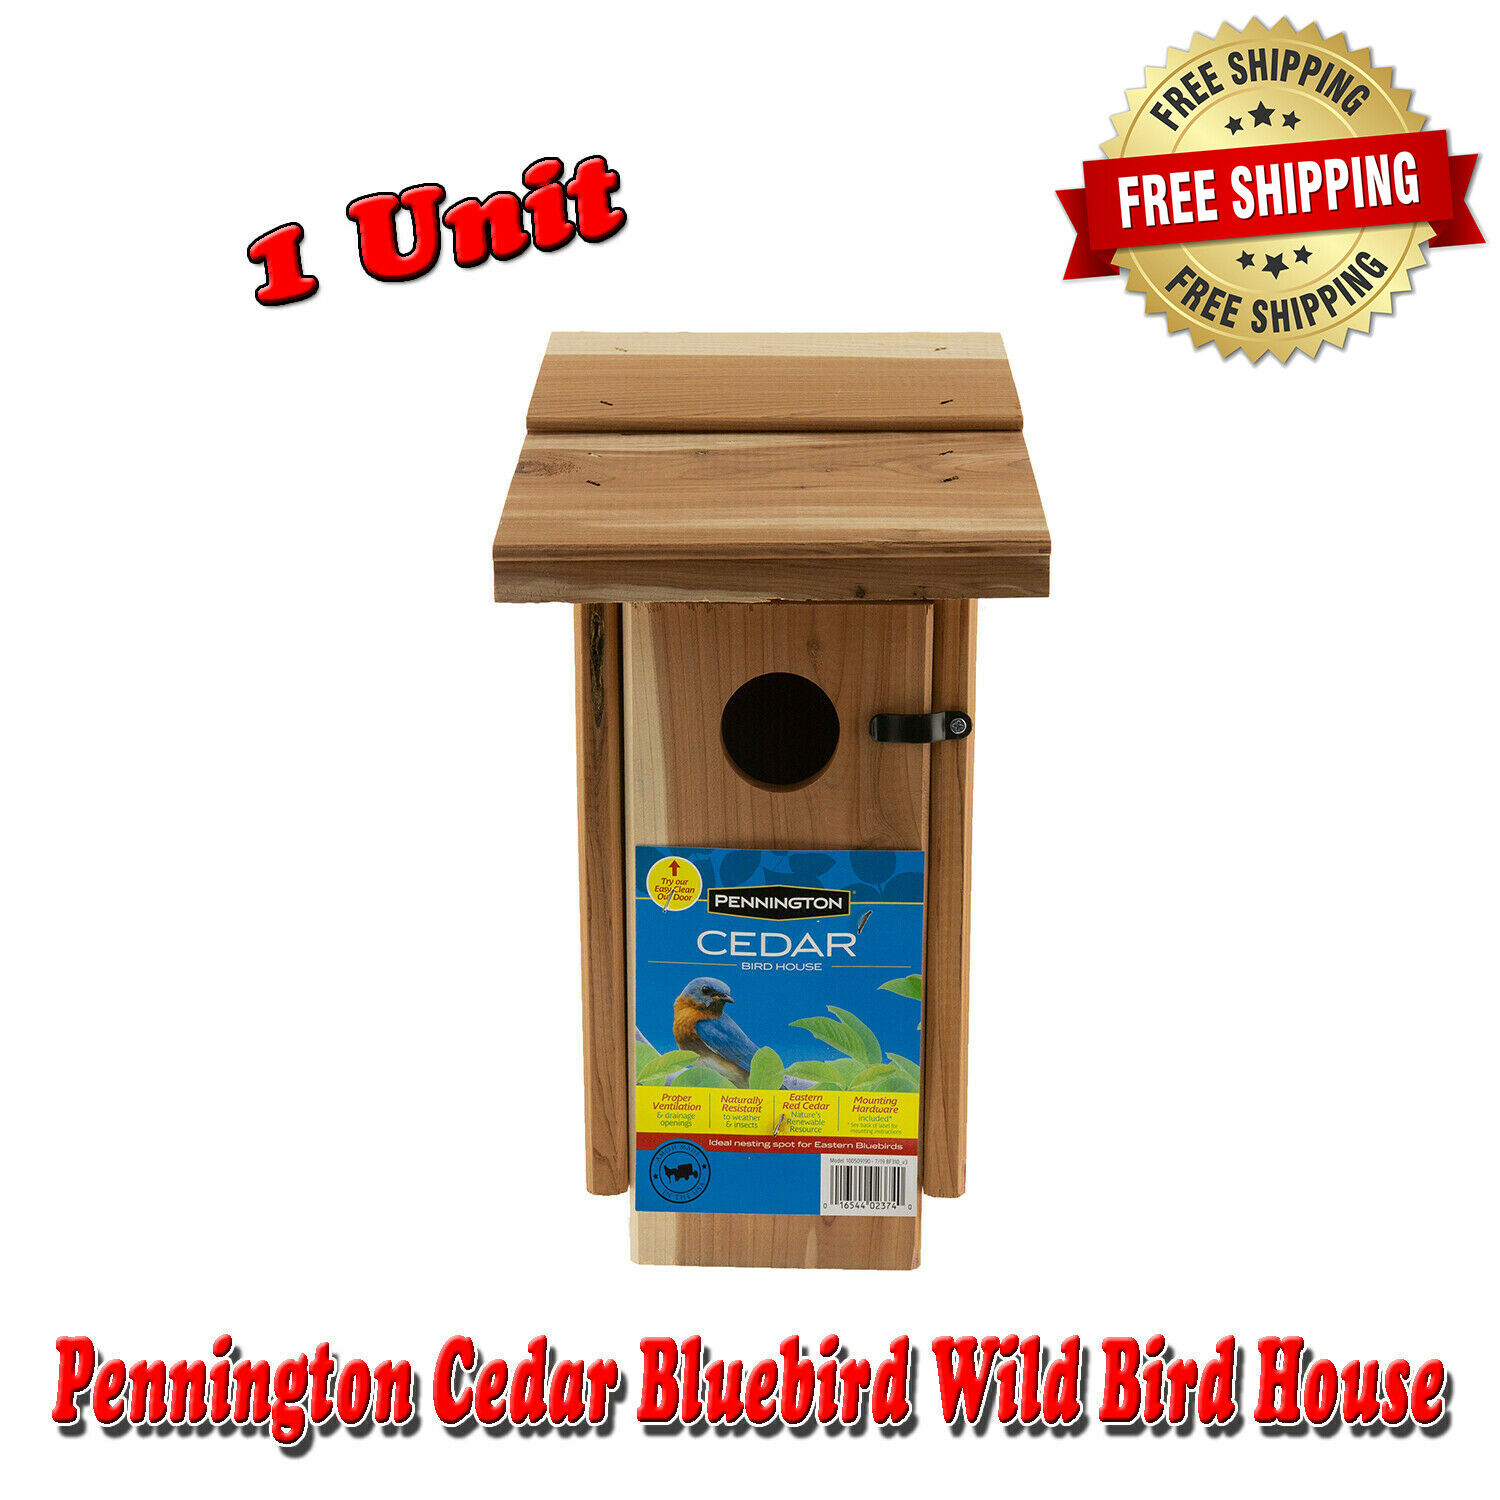 Pennington Cedar Bluebird Wild Bird House, 1 unit, Made of Cedar Wood